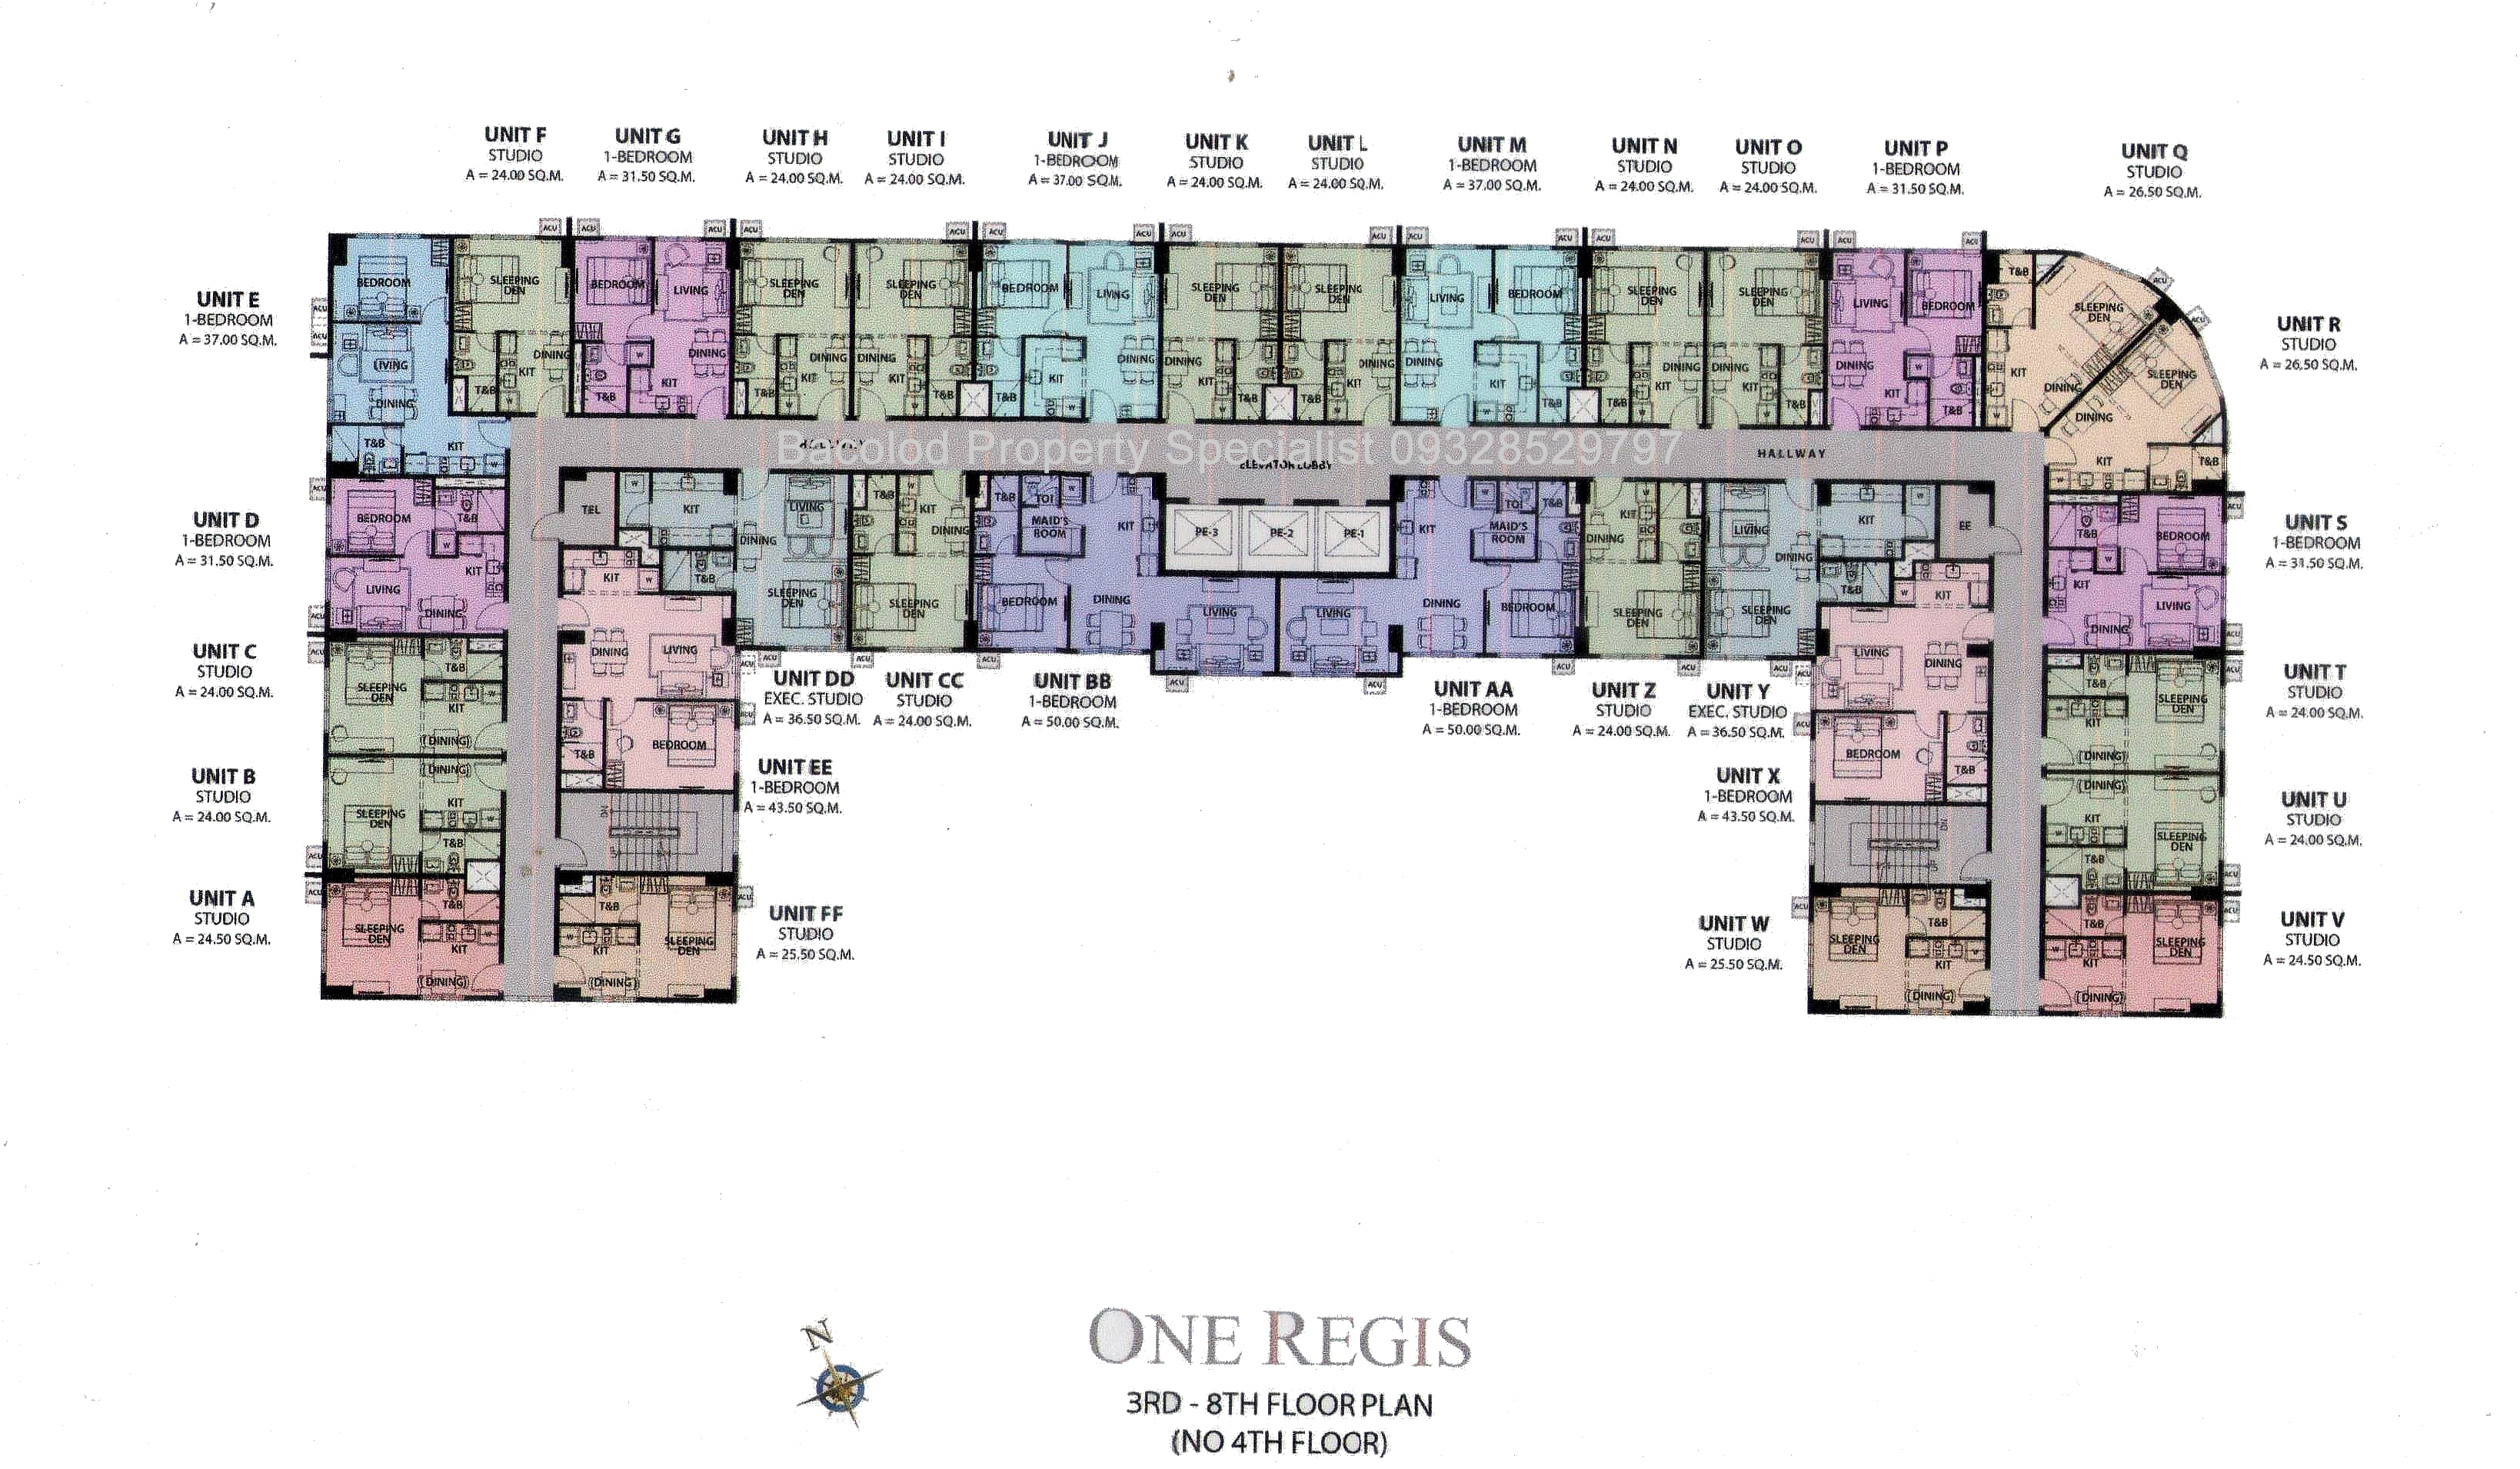 One Regis 3rd to 8th Floor Plan